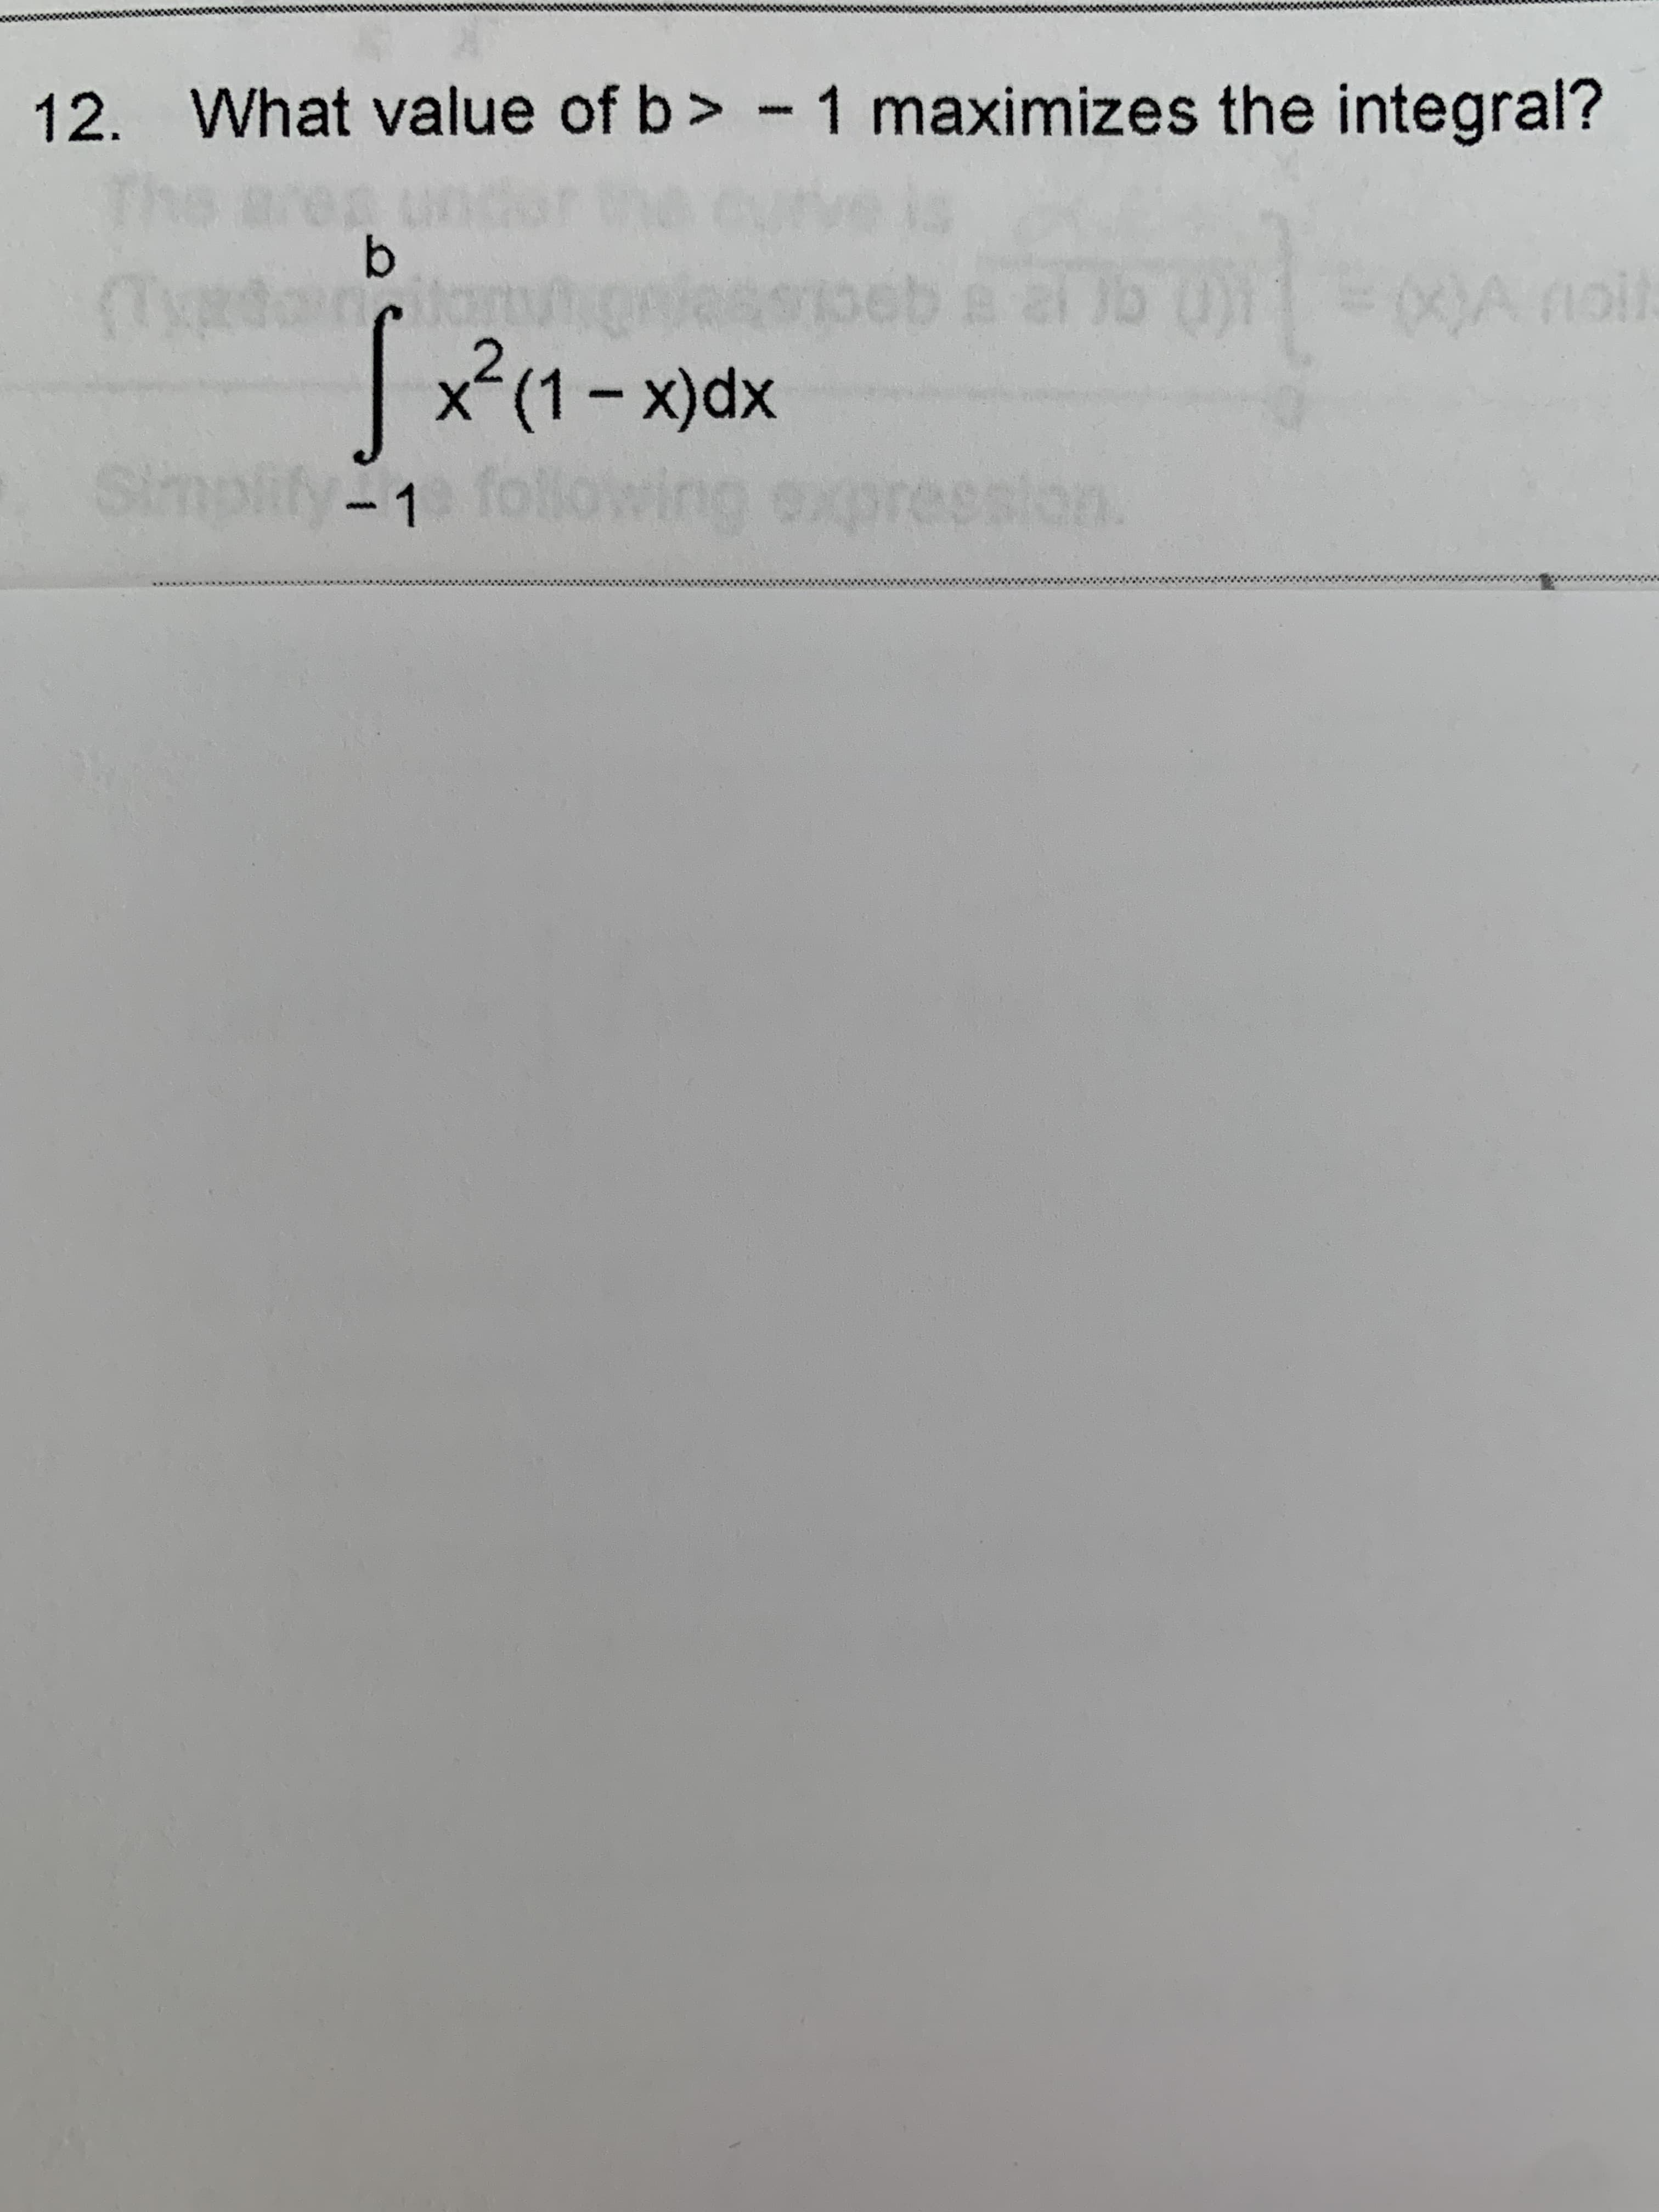 12. What value of b> - 1 maximizes the integral?
b
A nolh
|
x-(1-x)dx
Simplify-1 following expresslon.
